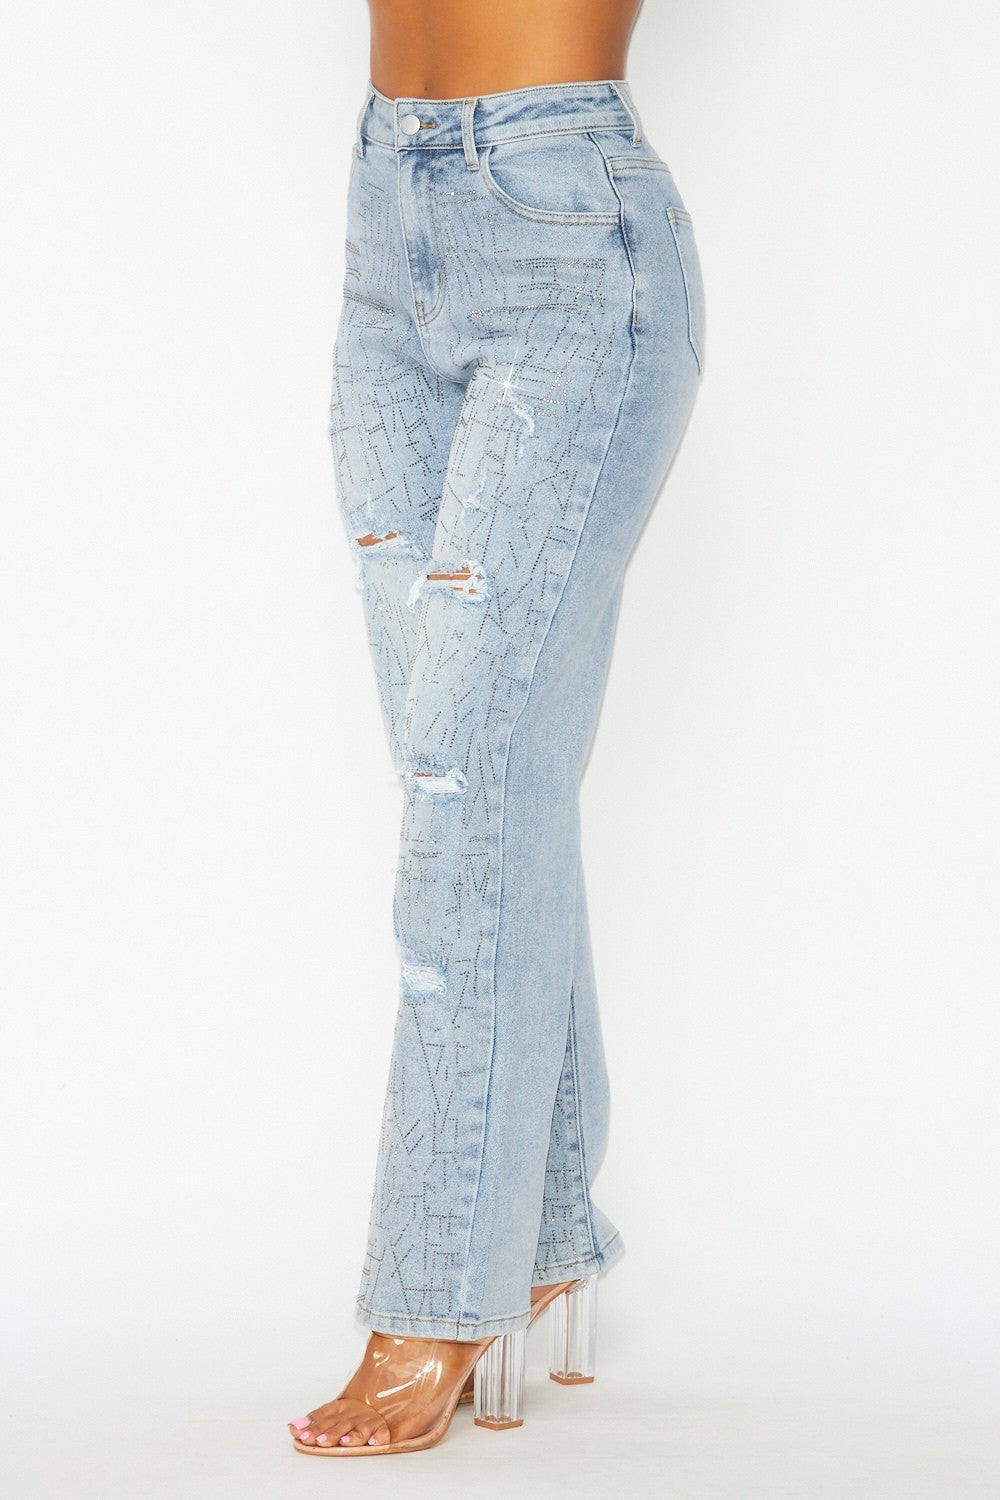 Glamorous Rhinestone High Rise Denim Jeans